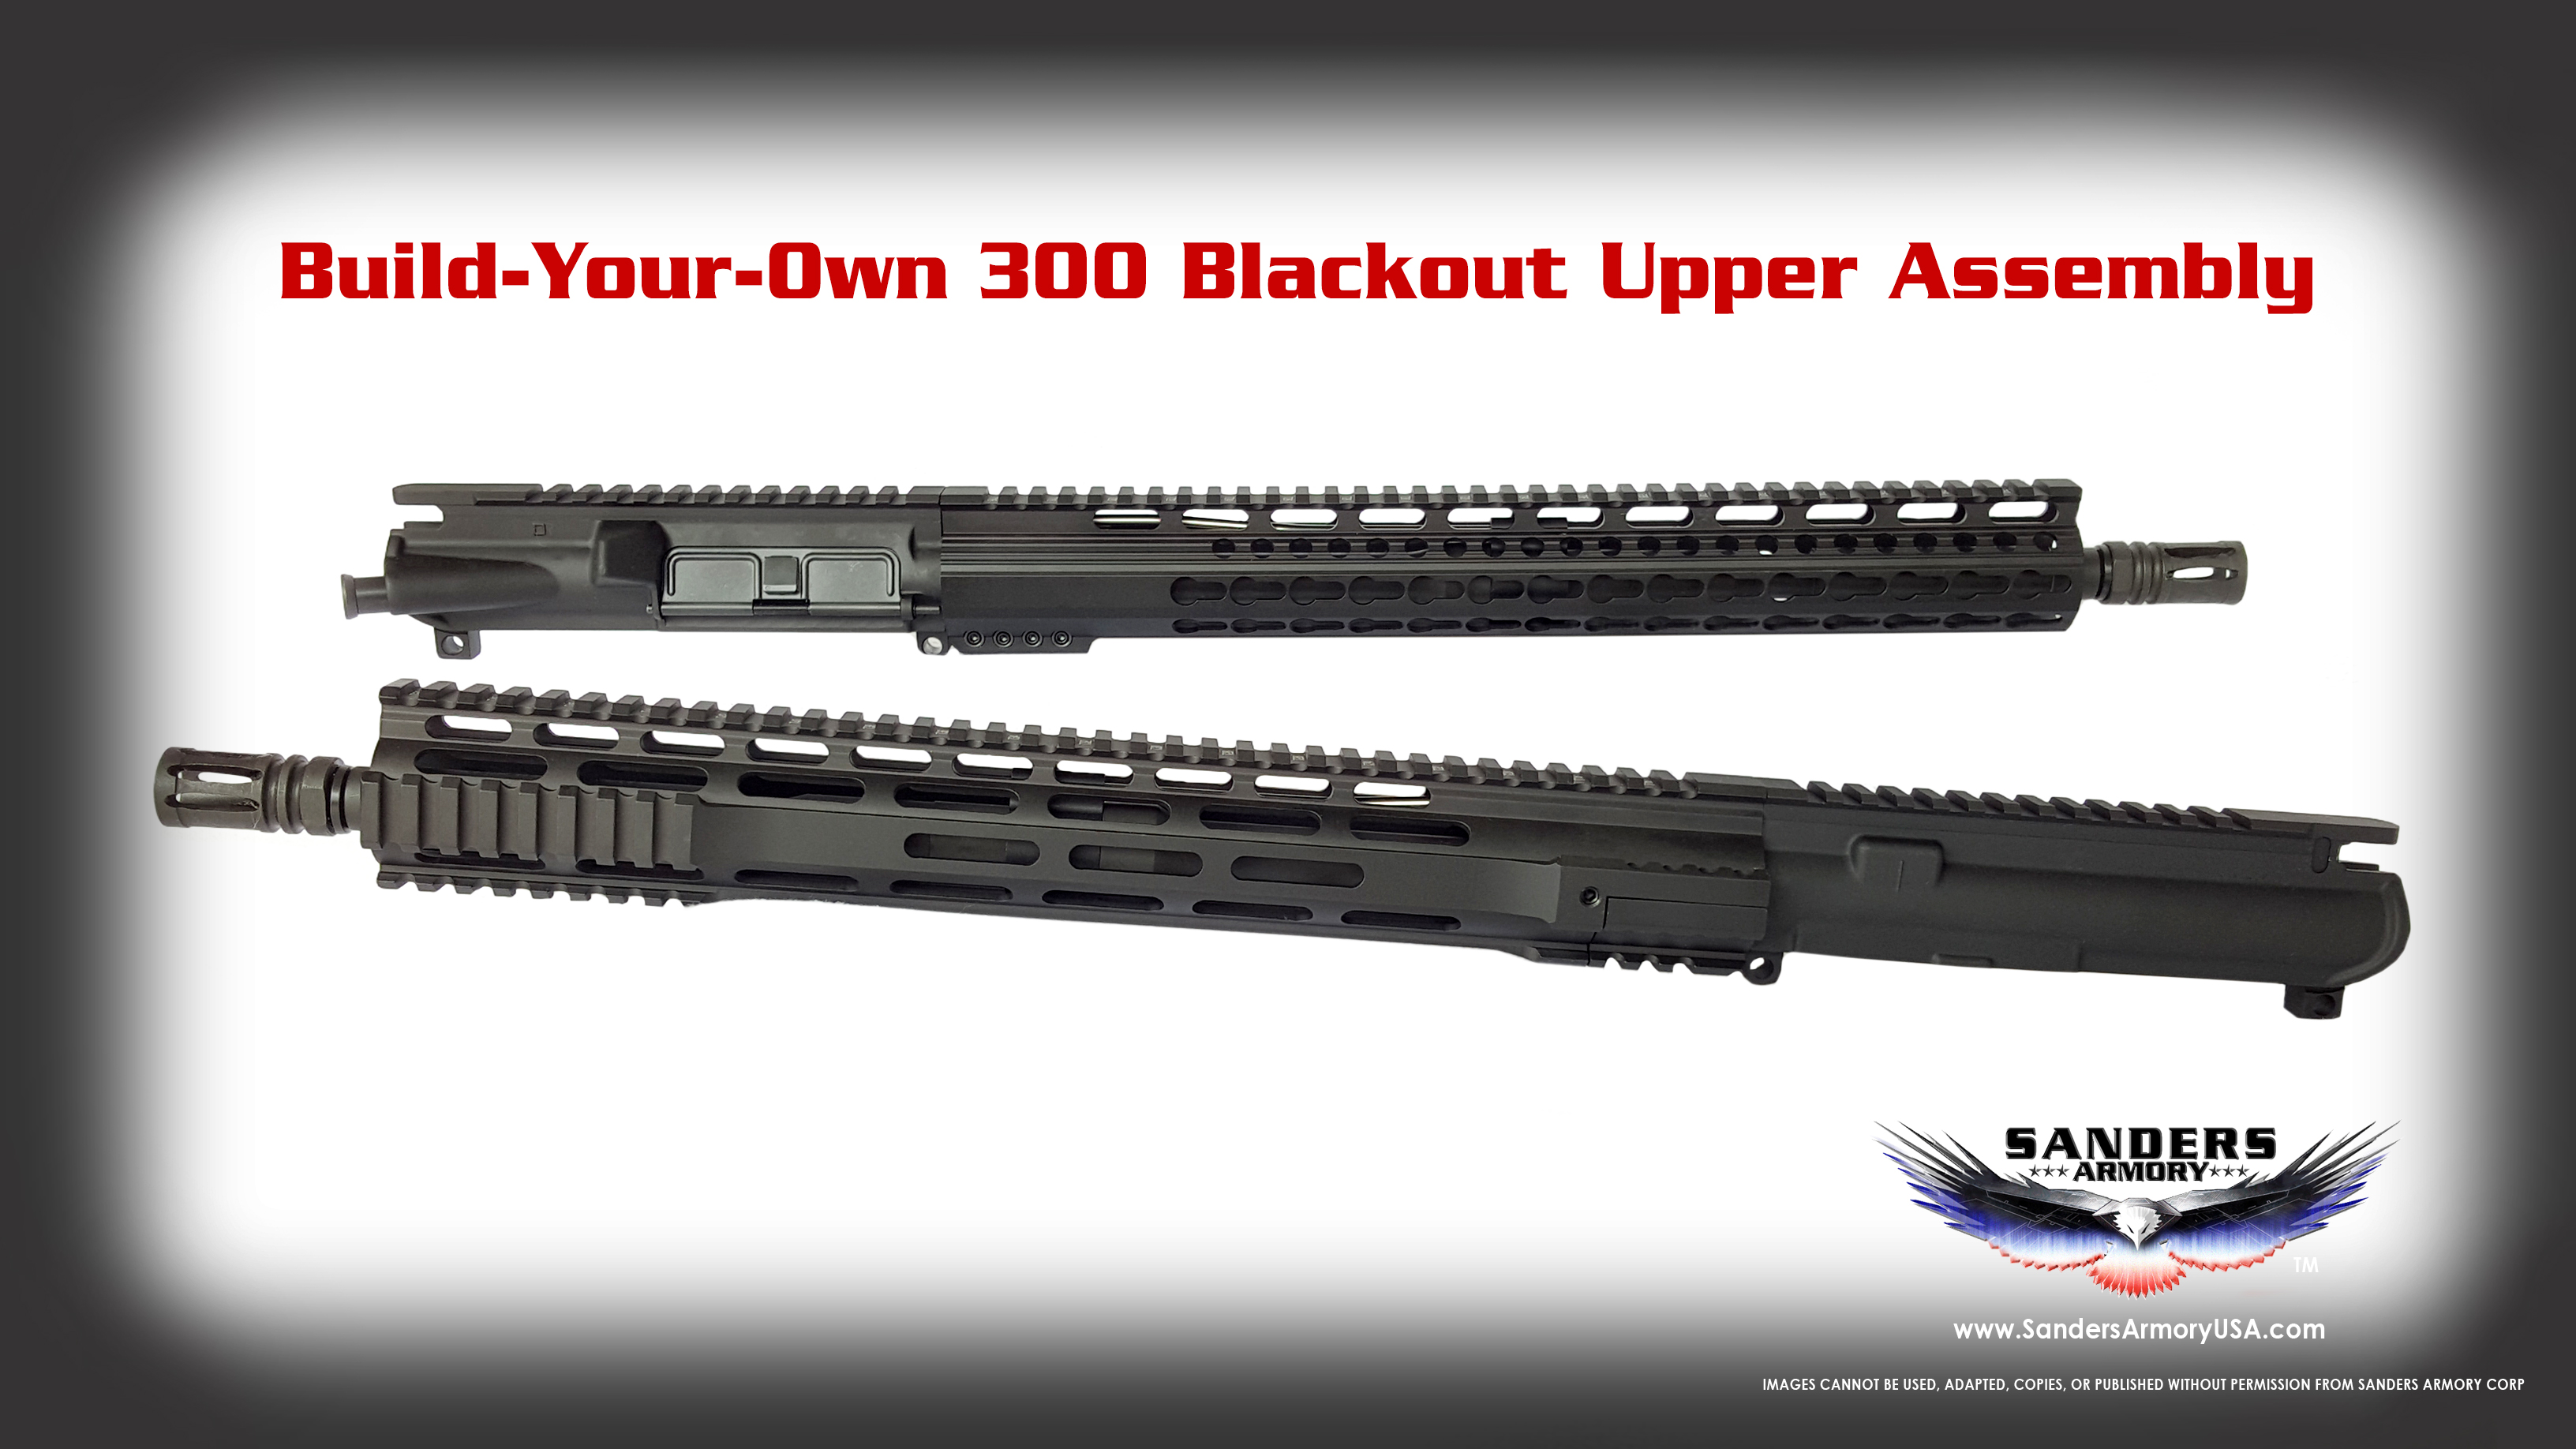 Kak 300 Blackout Upper